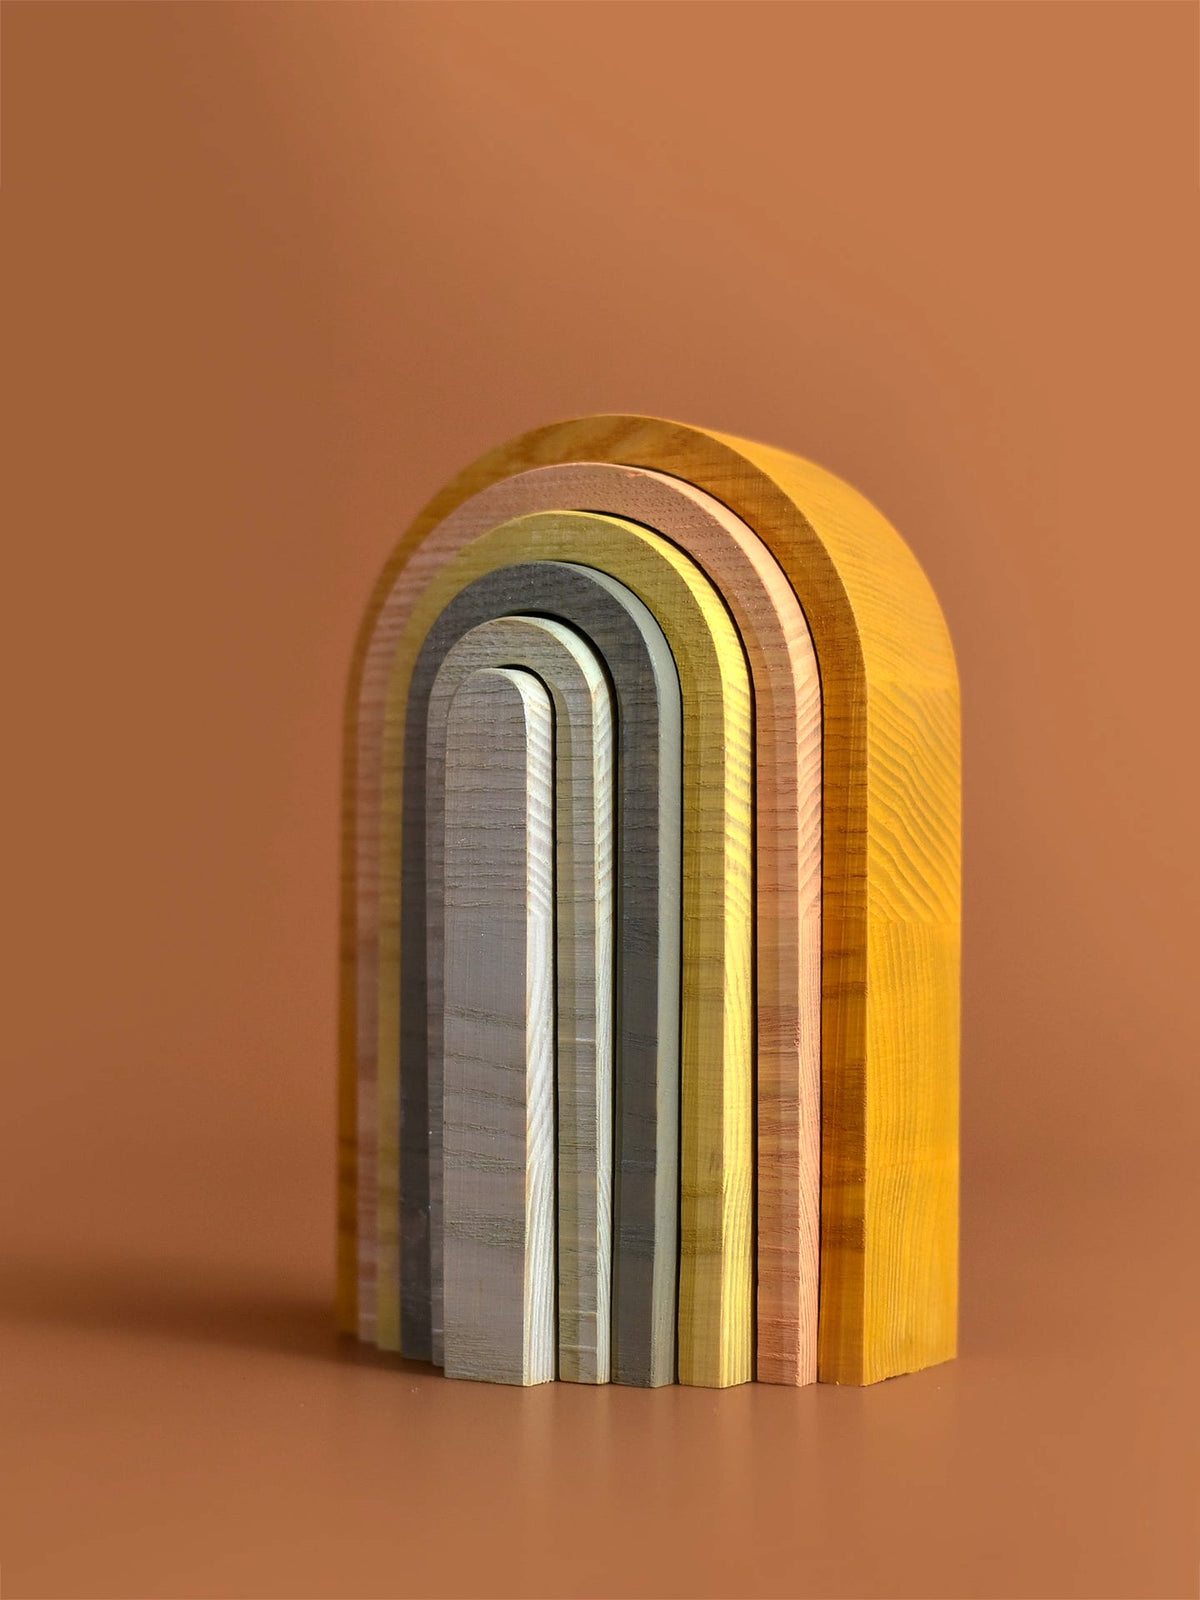 A set of Big Rainbow - Pastel wooden blocks on a brown surface by MinMin Copenhagen.